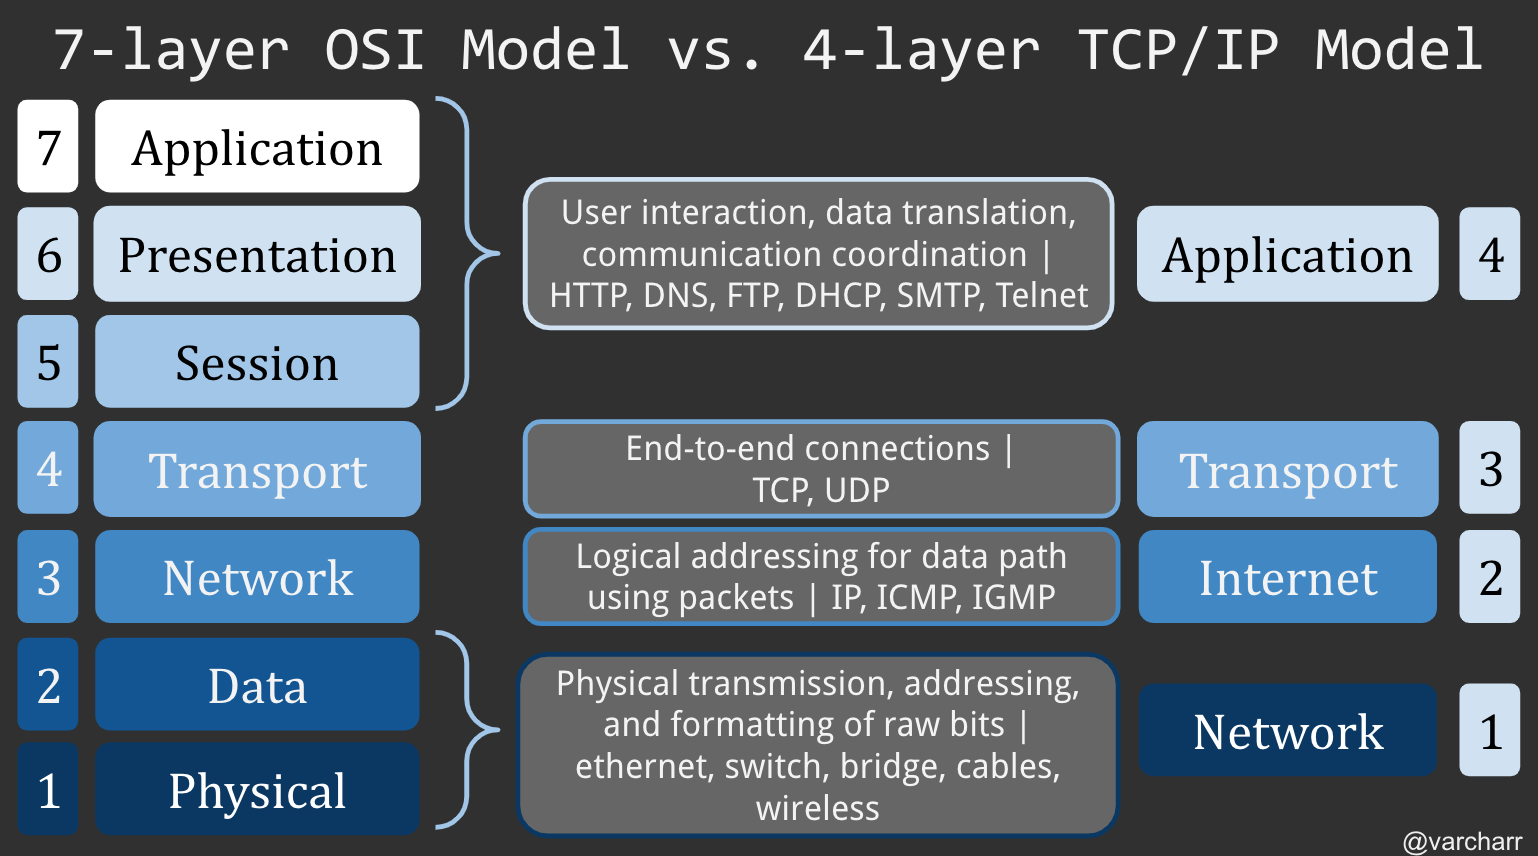 OSI vs. TCP/IP models